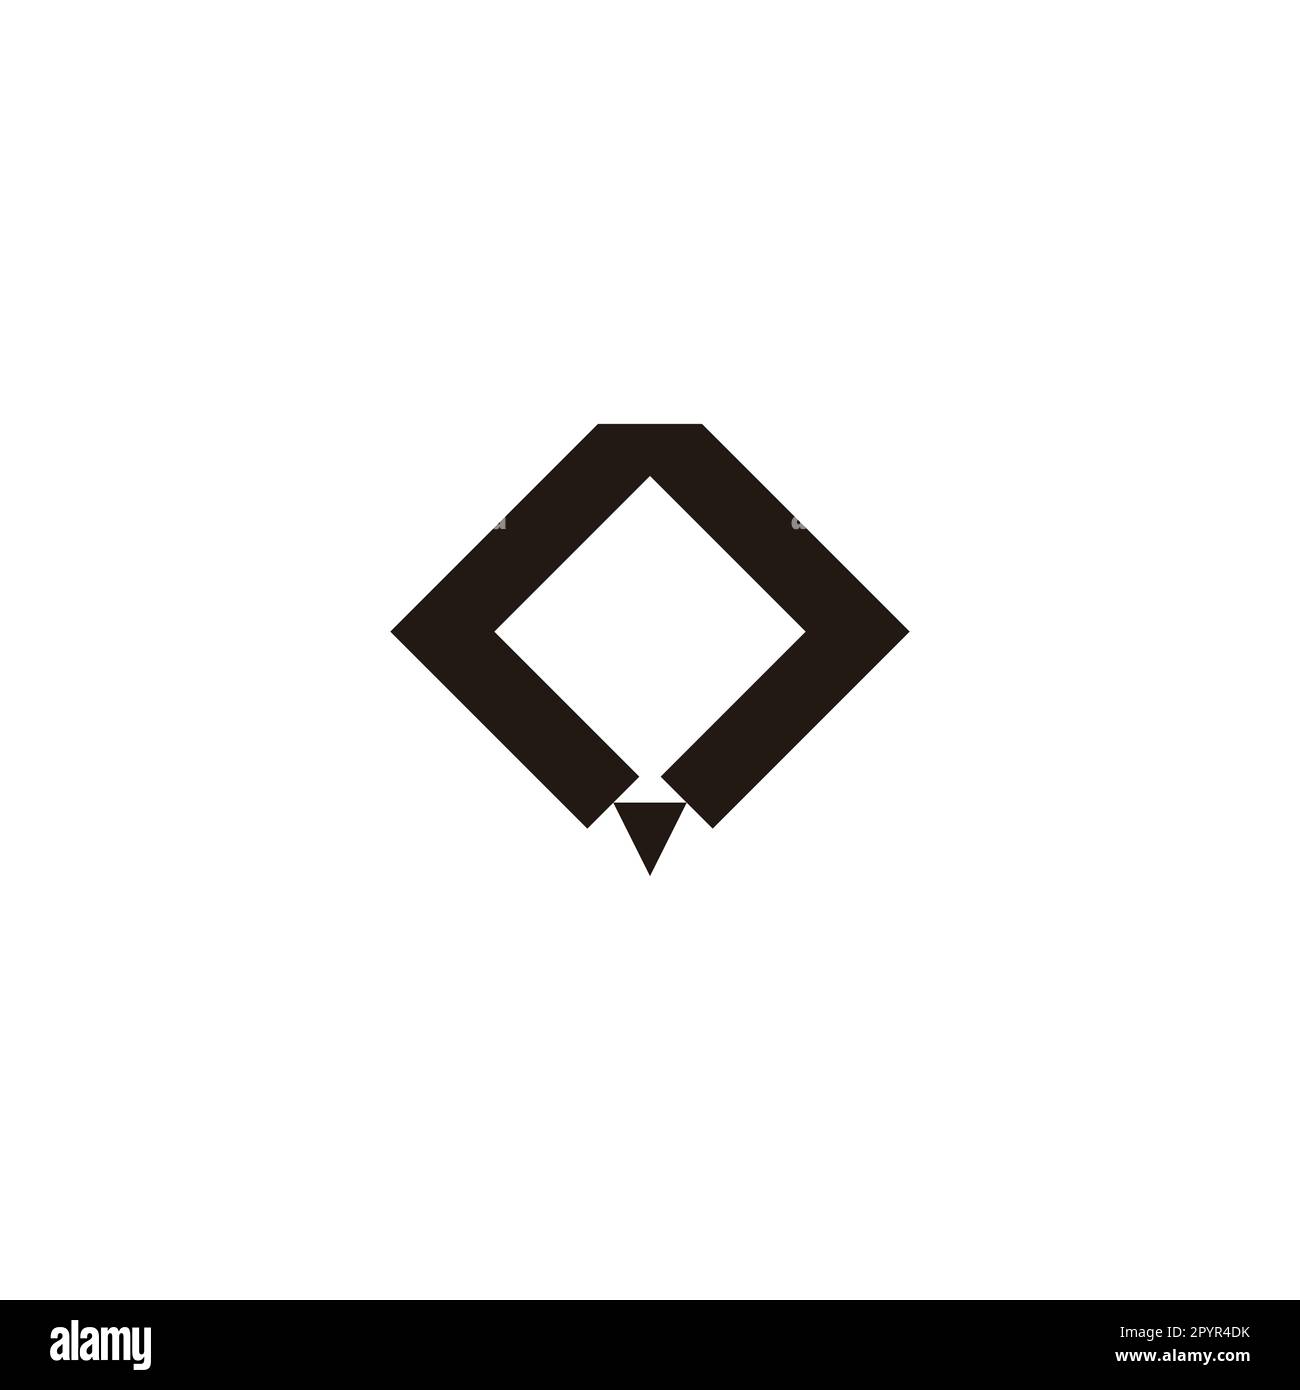 Diamond, pencil, square geometric symbol simple logo vector Stock Vector